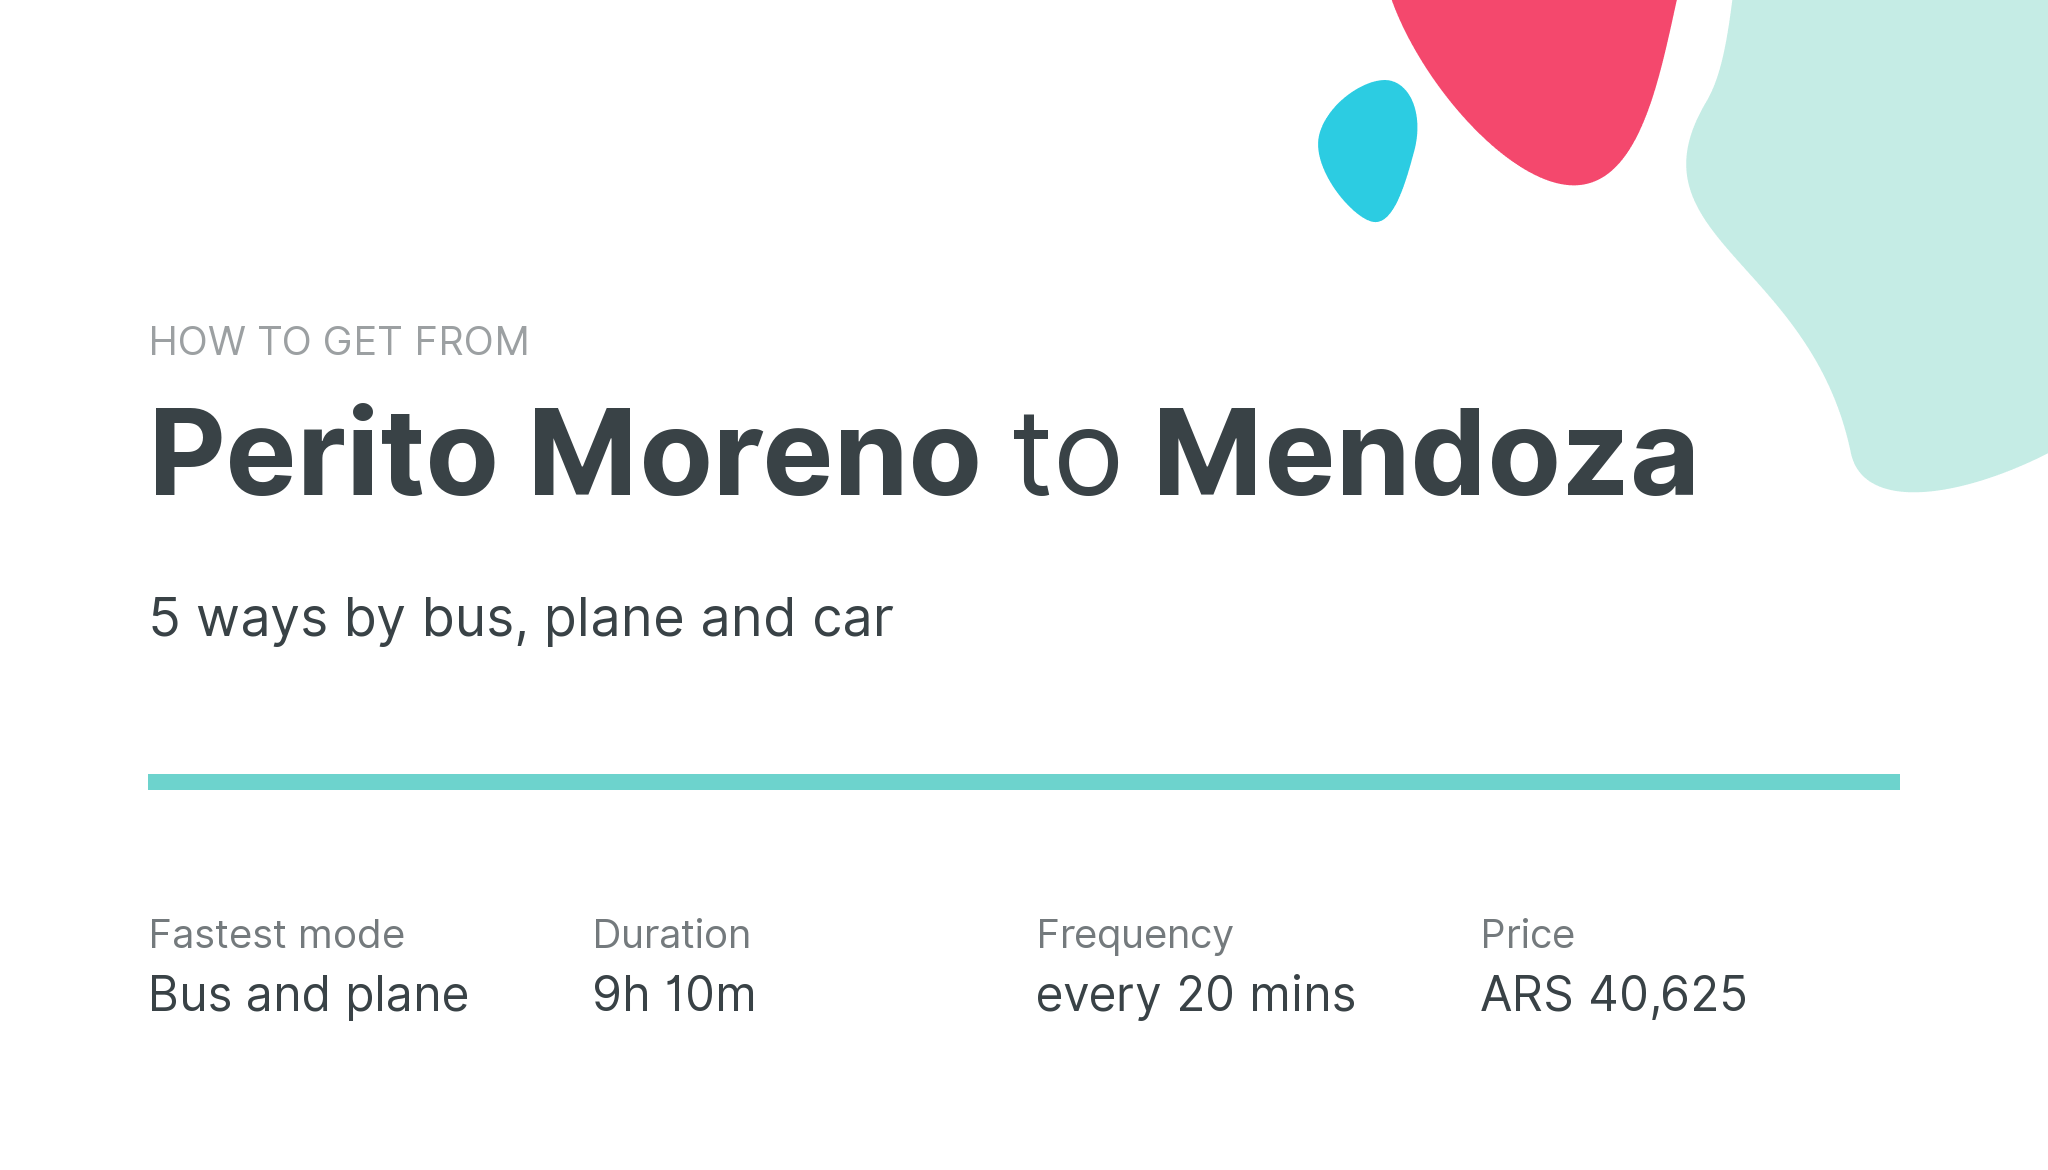 How do I get from Perito Moreno to Mendoza